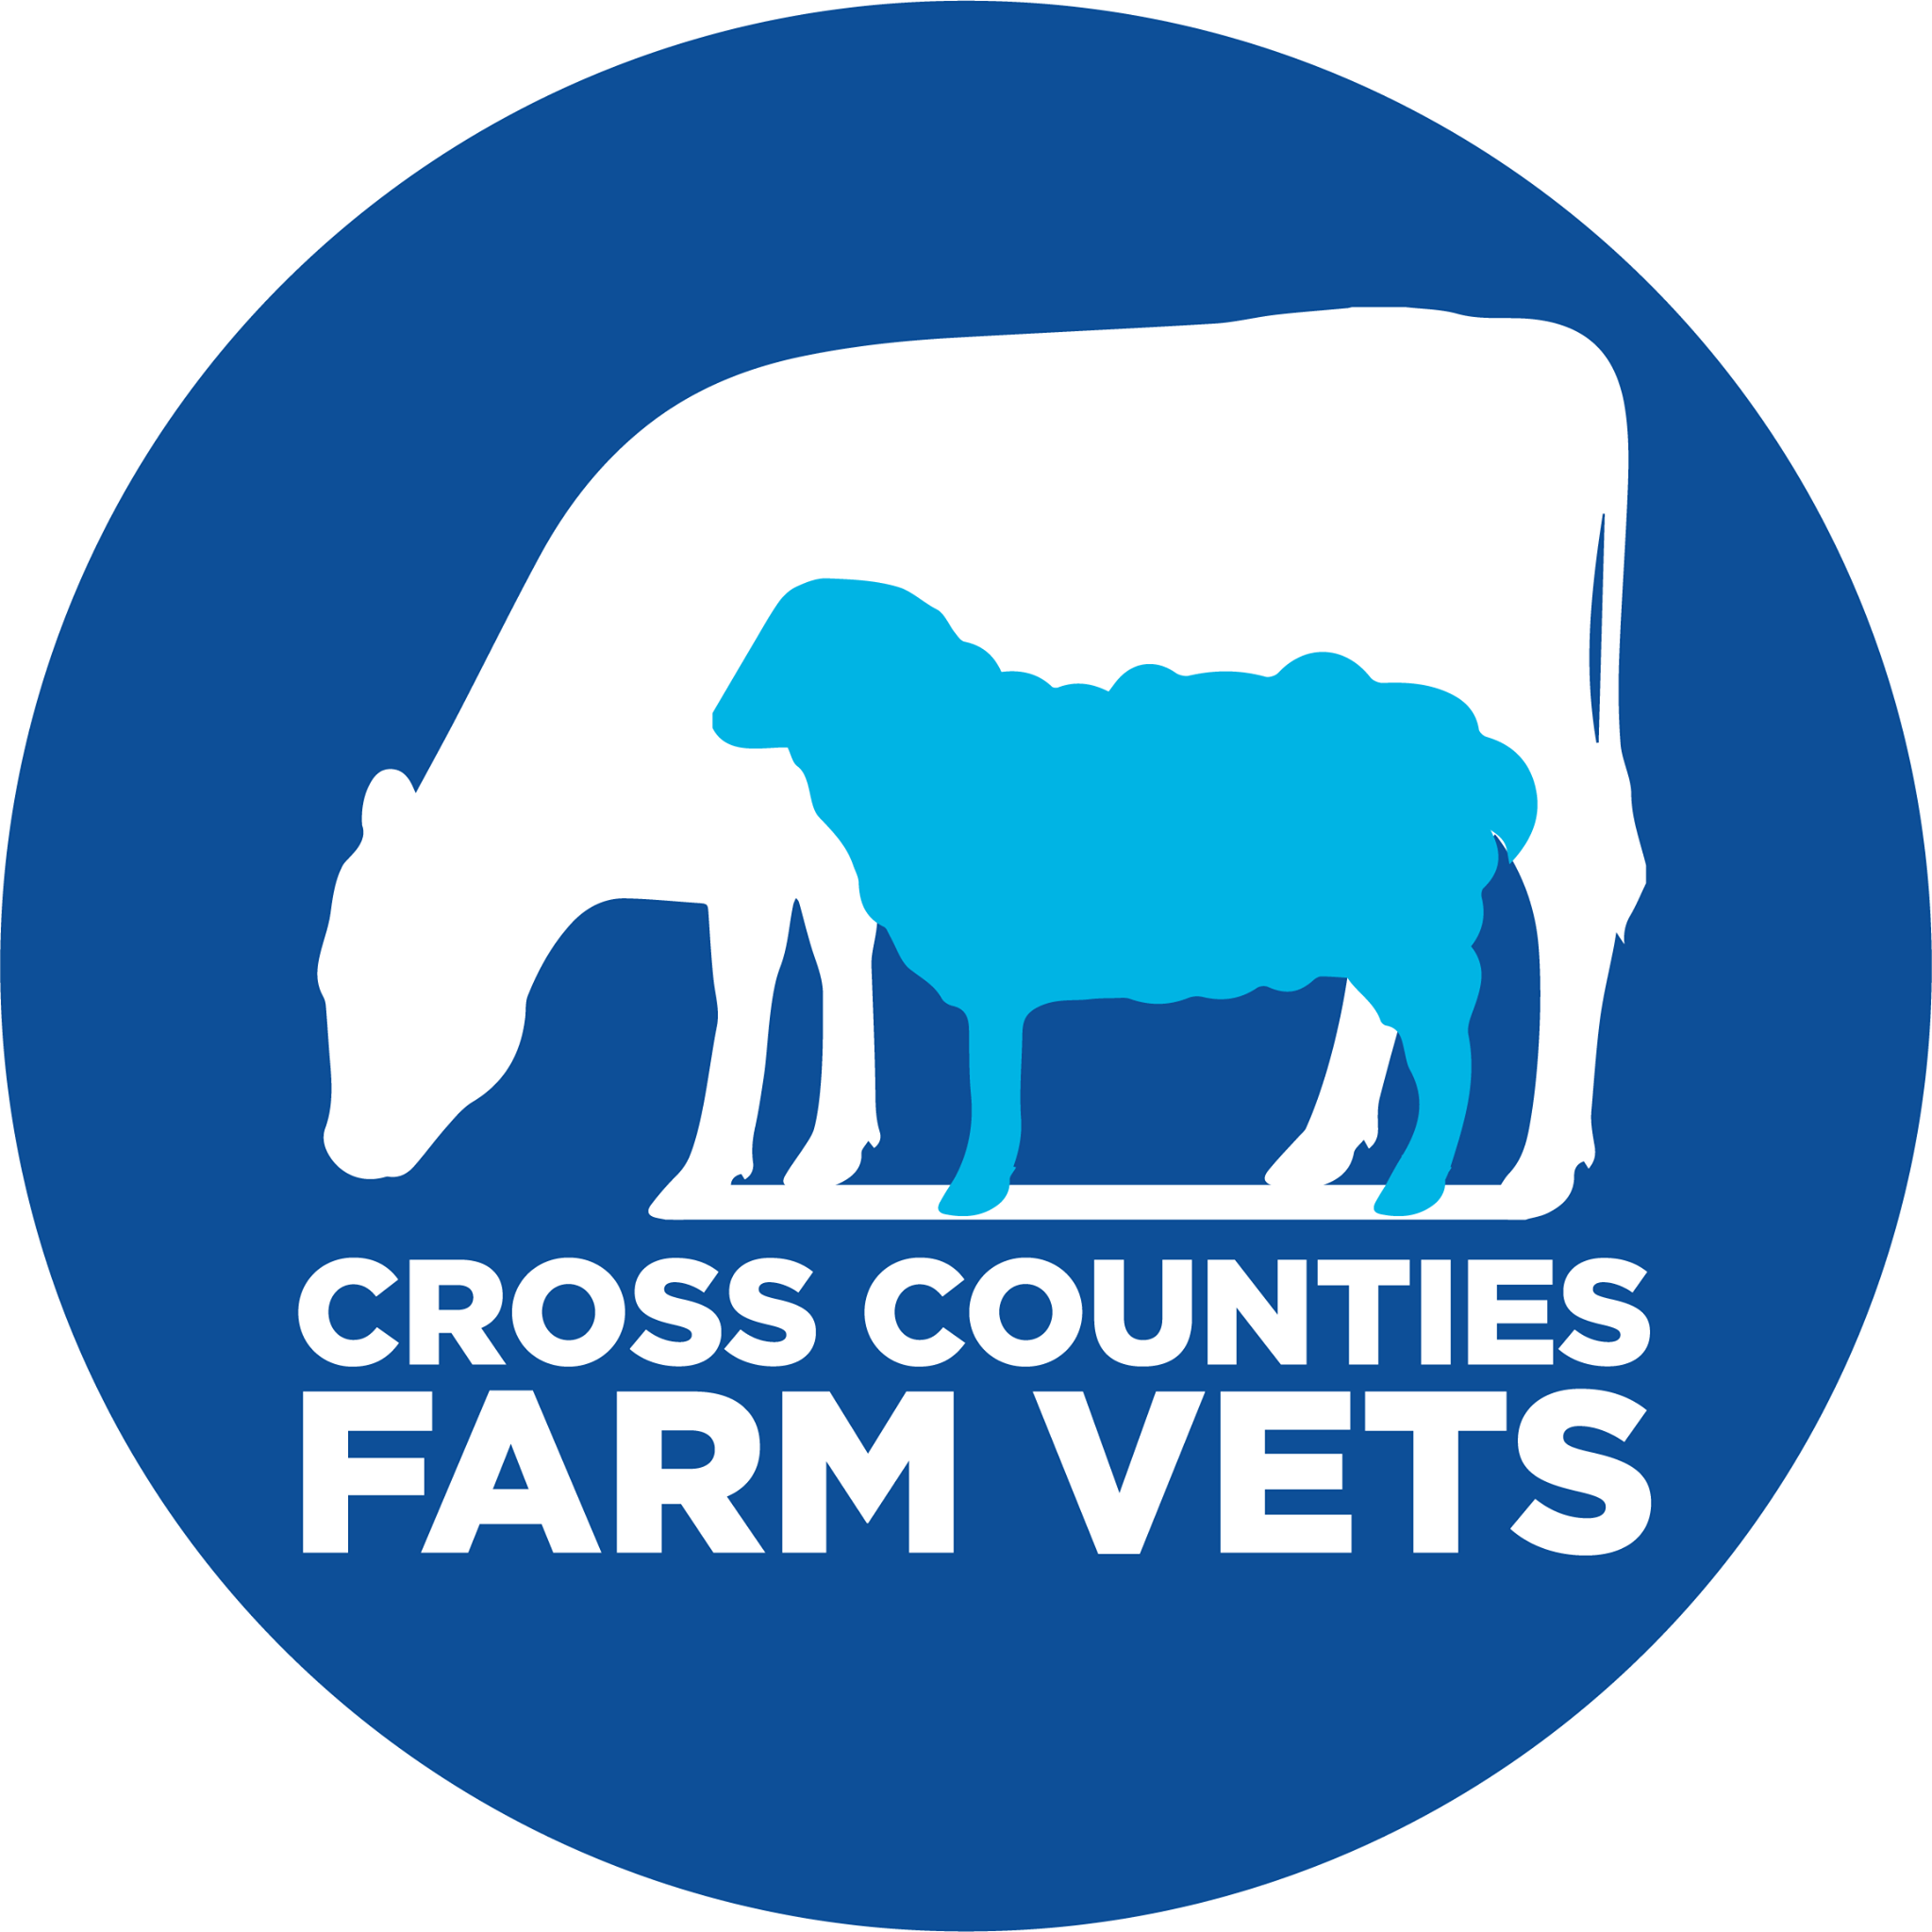 Cross Counties Farm Vets - Welford Logo